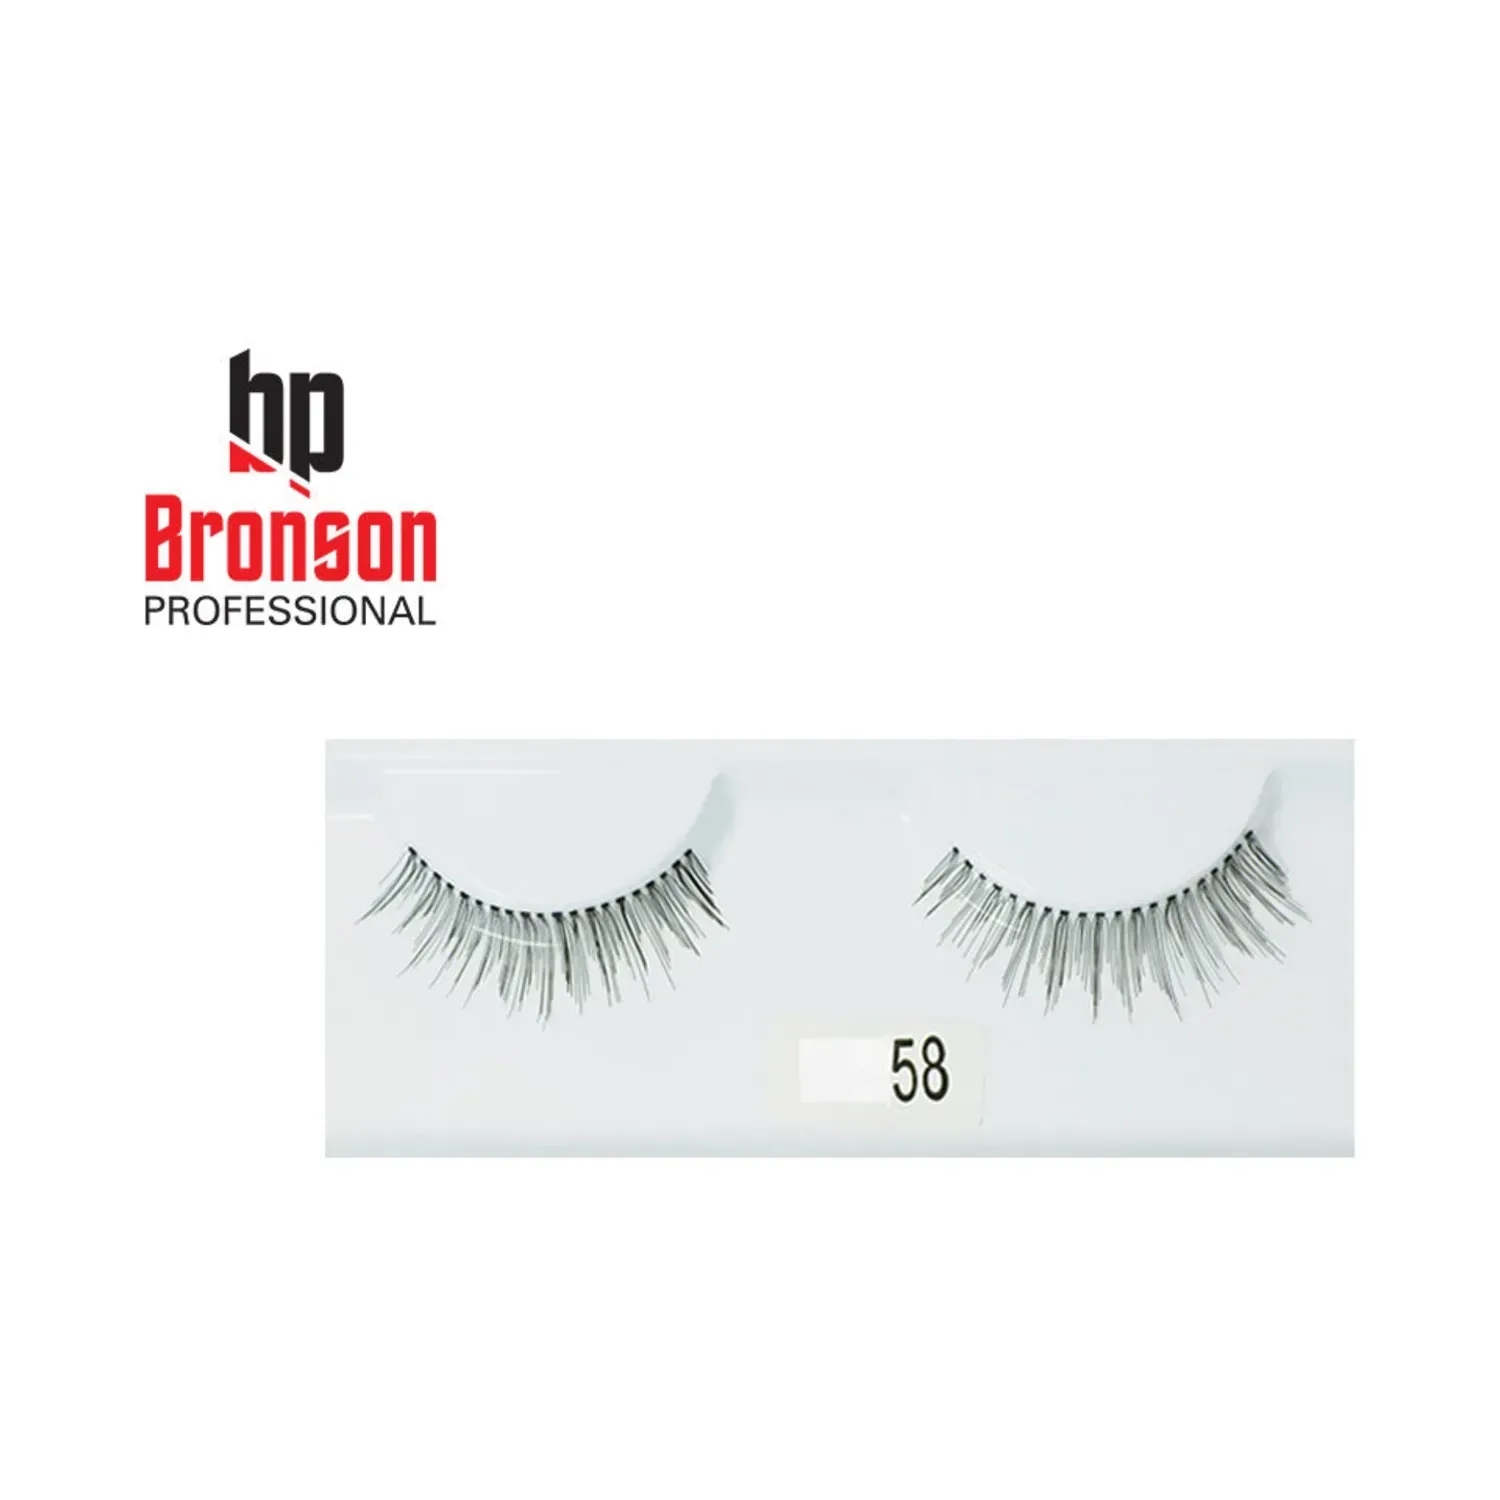 Bronson Professional | Bronson Professional Eyelashes - 58 Black (1 Pair)